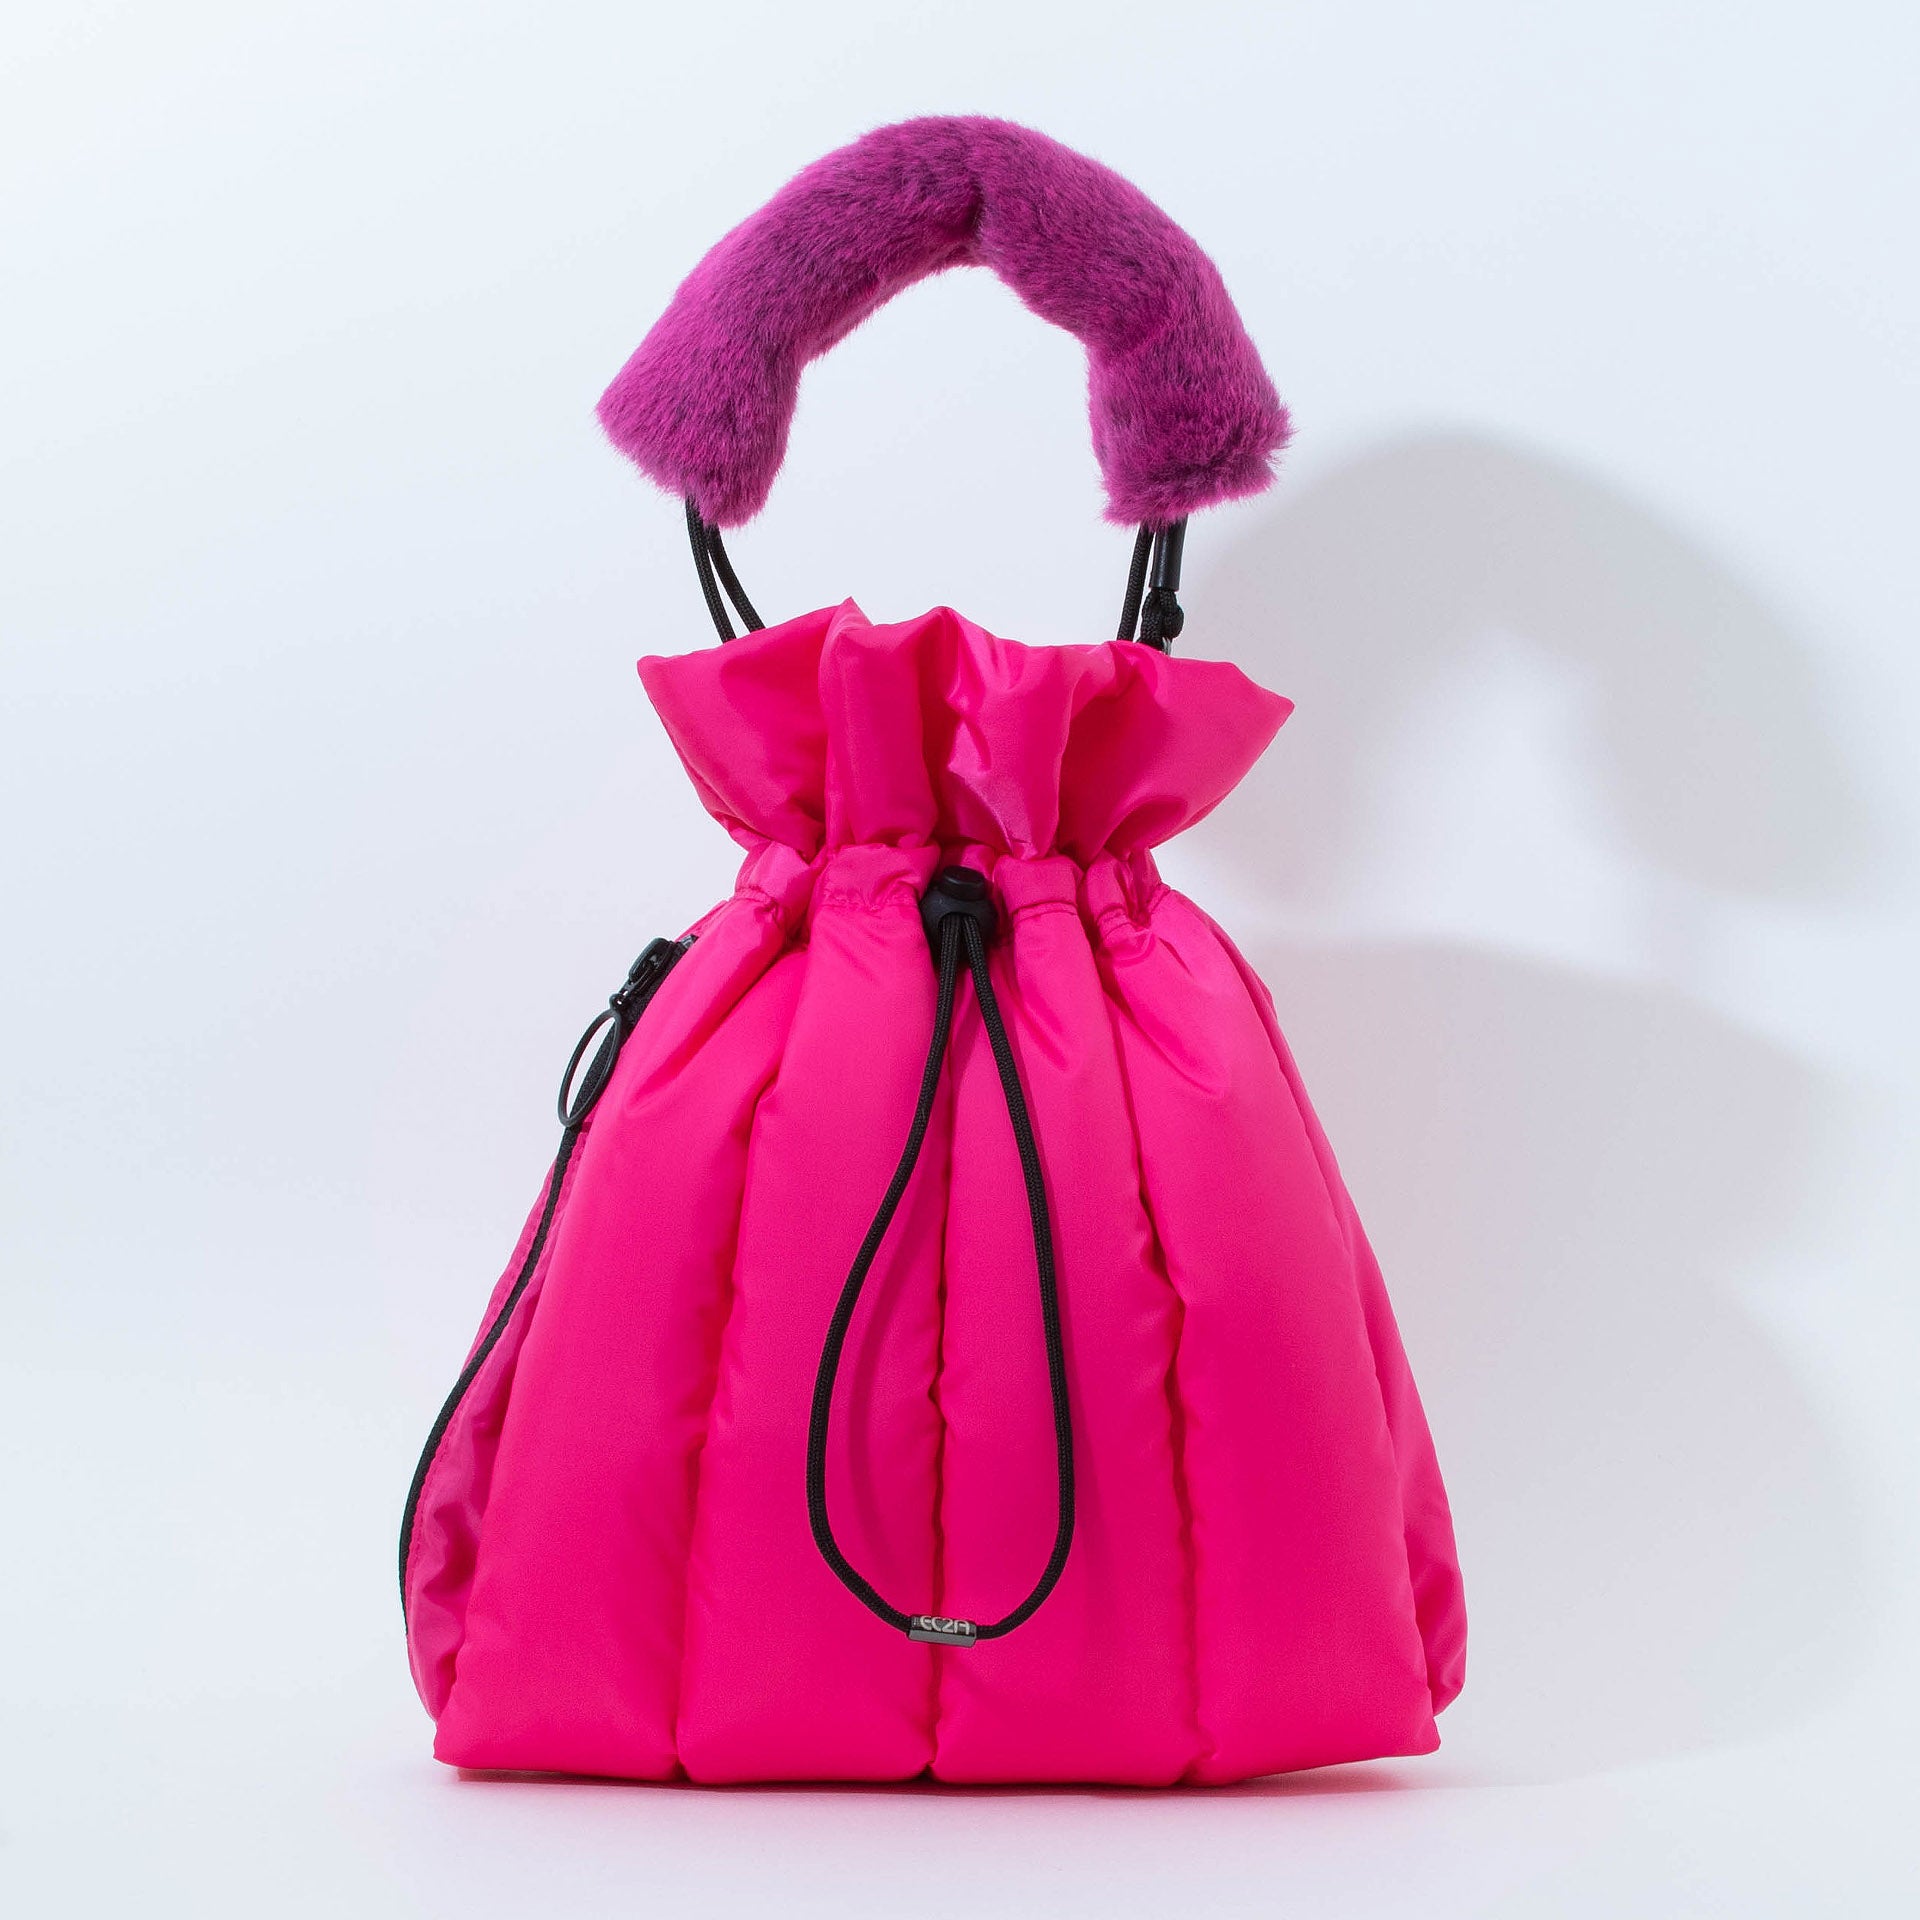 EC2A pink duck down puffer drawstring bag with short handle purple caterpillar shoulder accessory